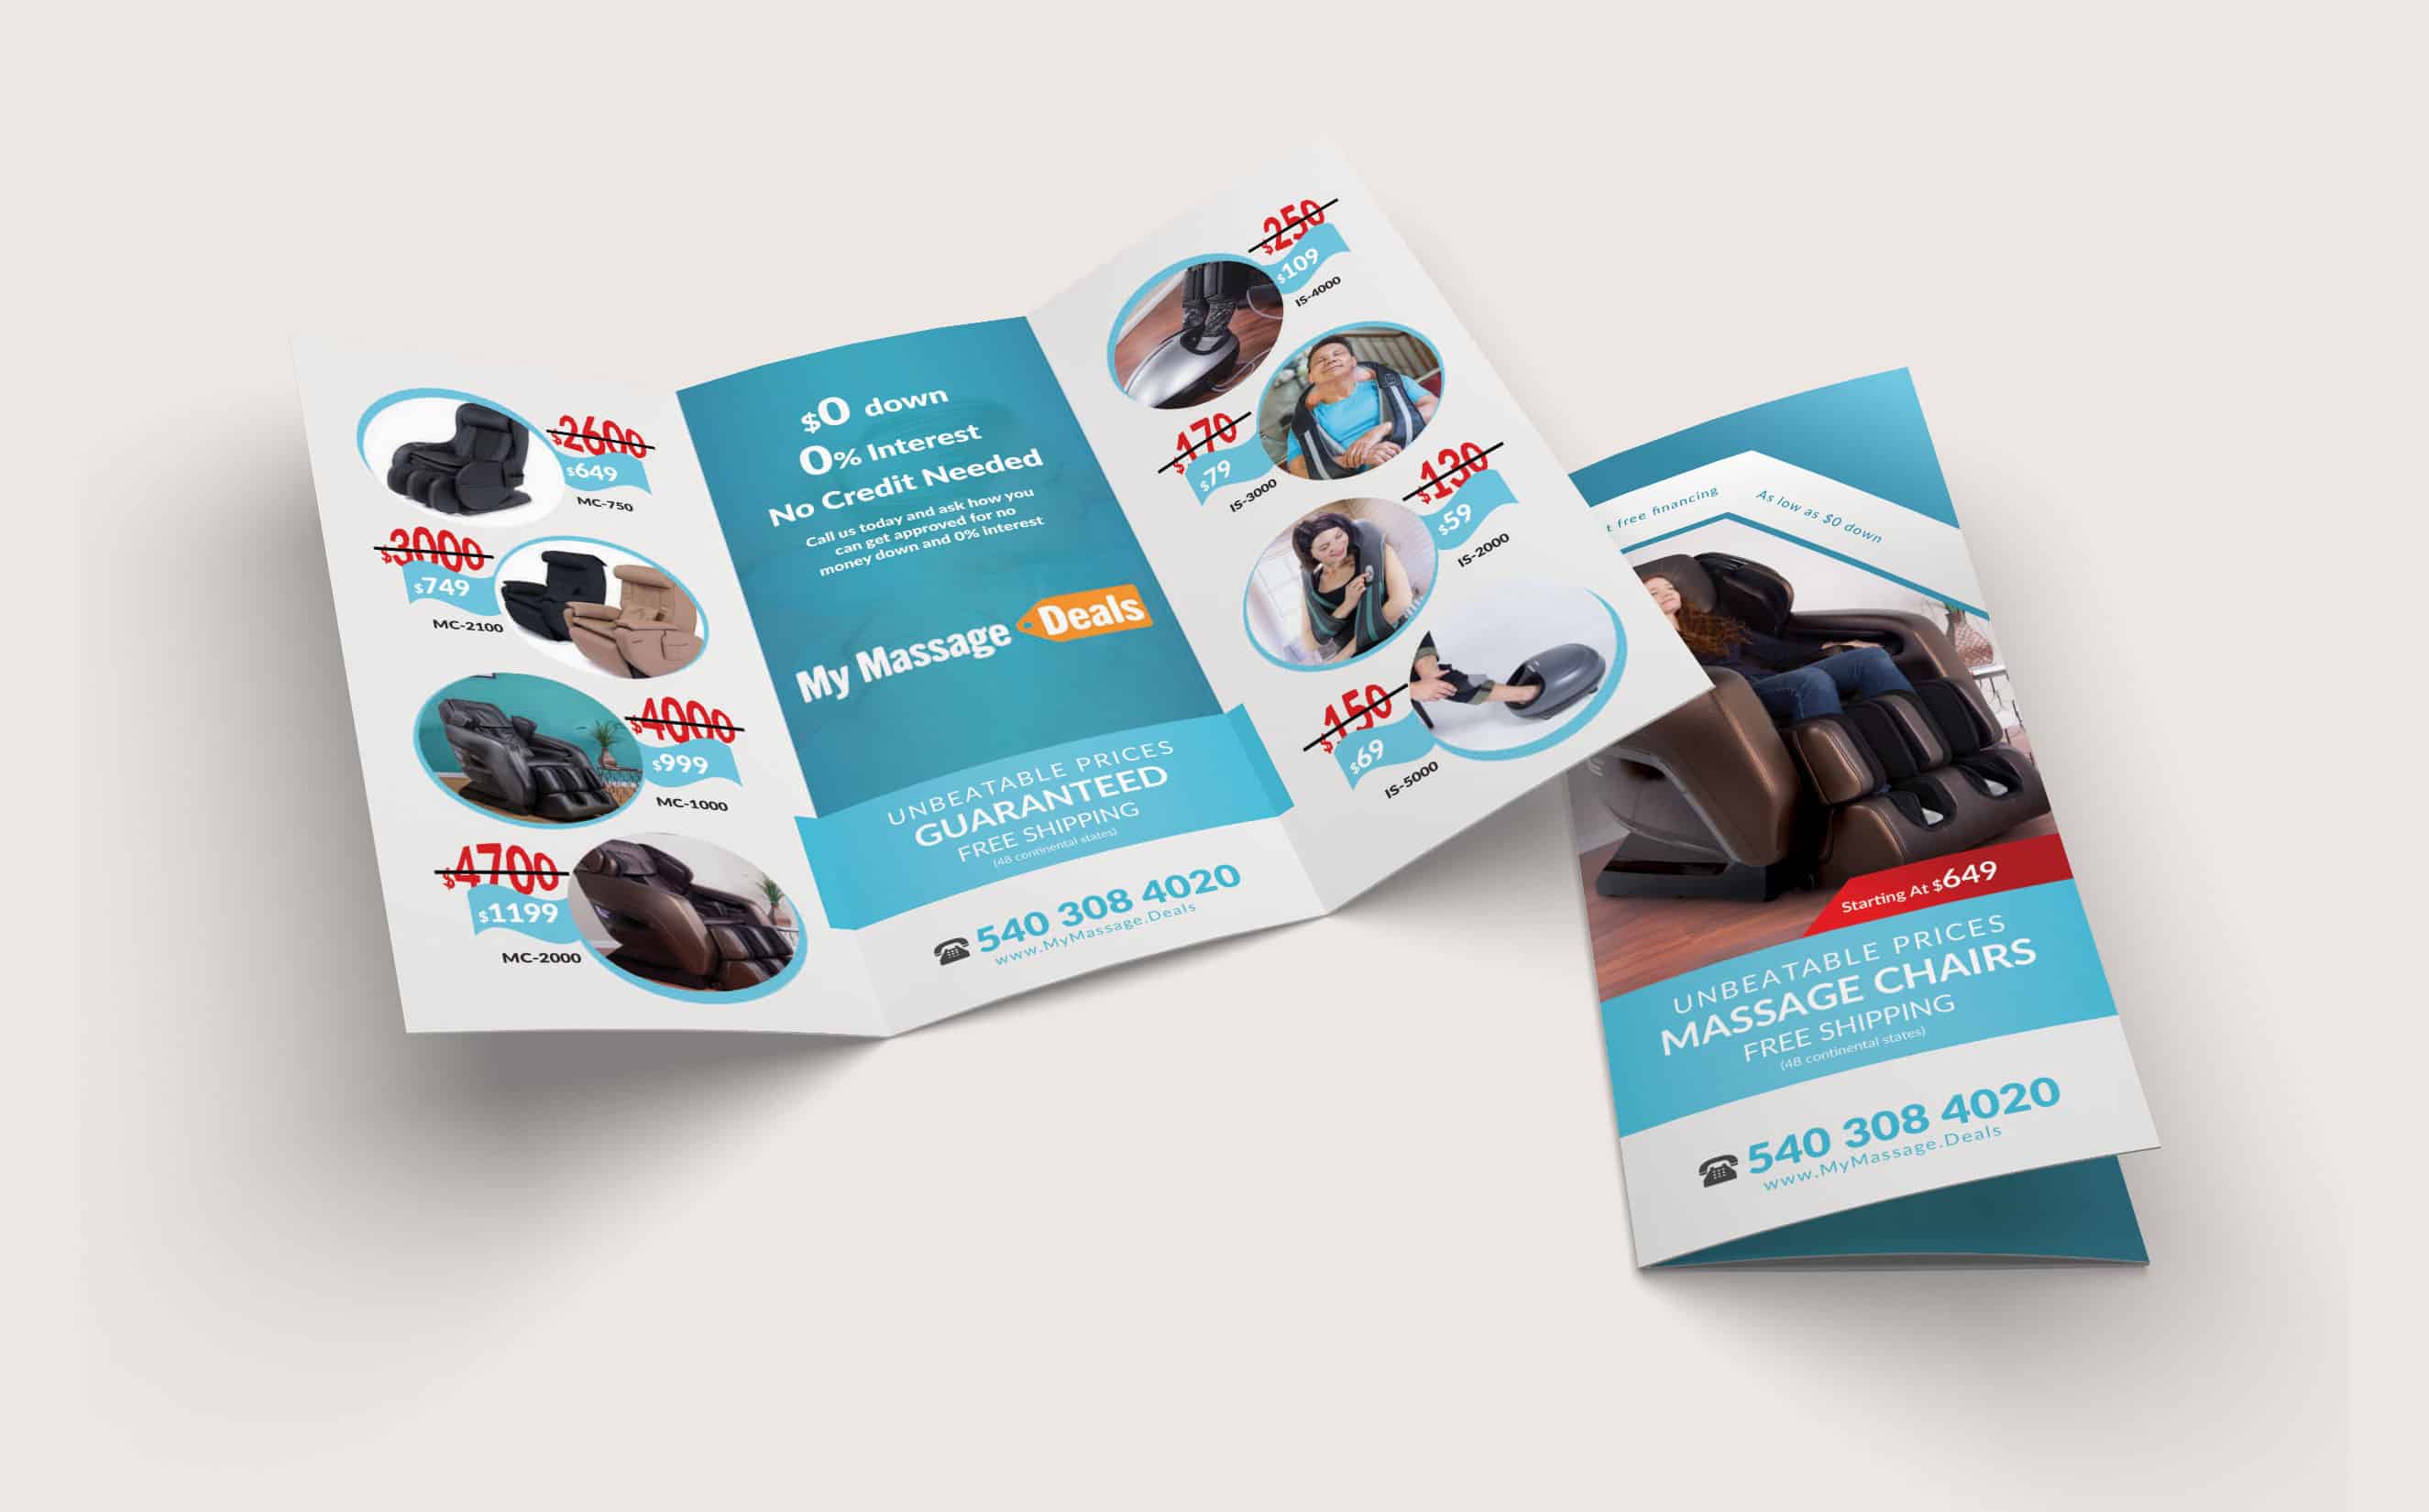 My Massage Deals - TriFold Brochure Layout Design by Ok Omni